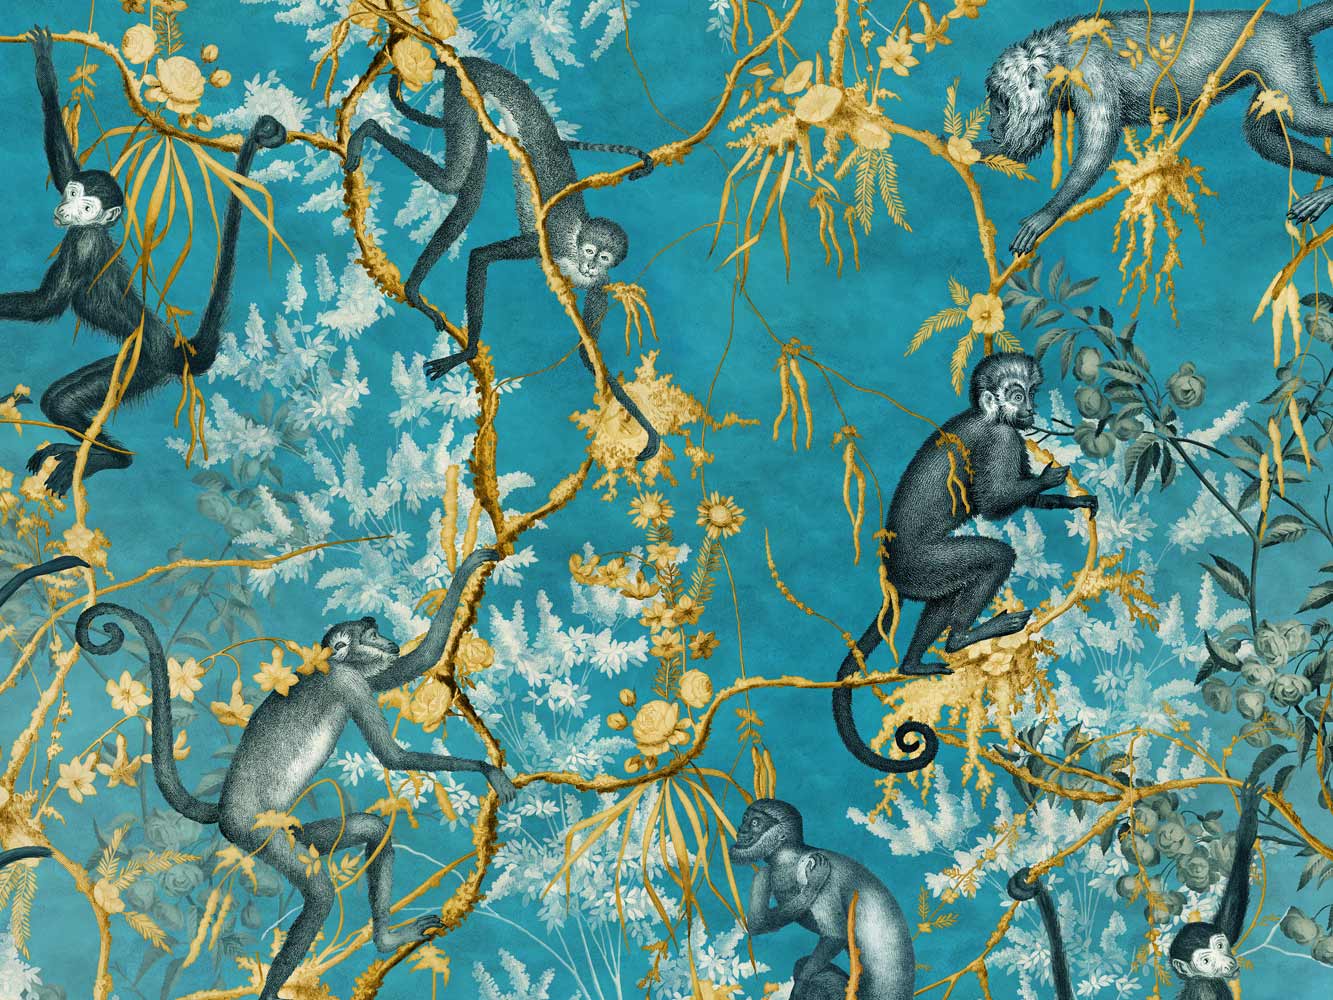 Cerulean primate wallpaper design in original colourway